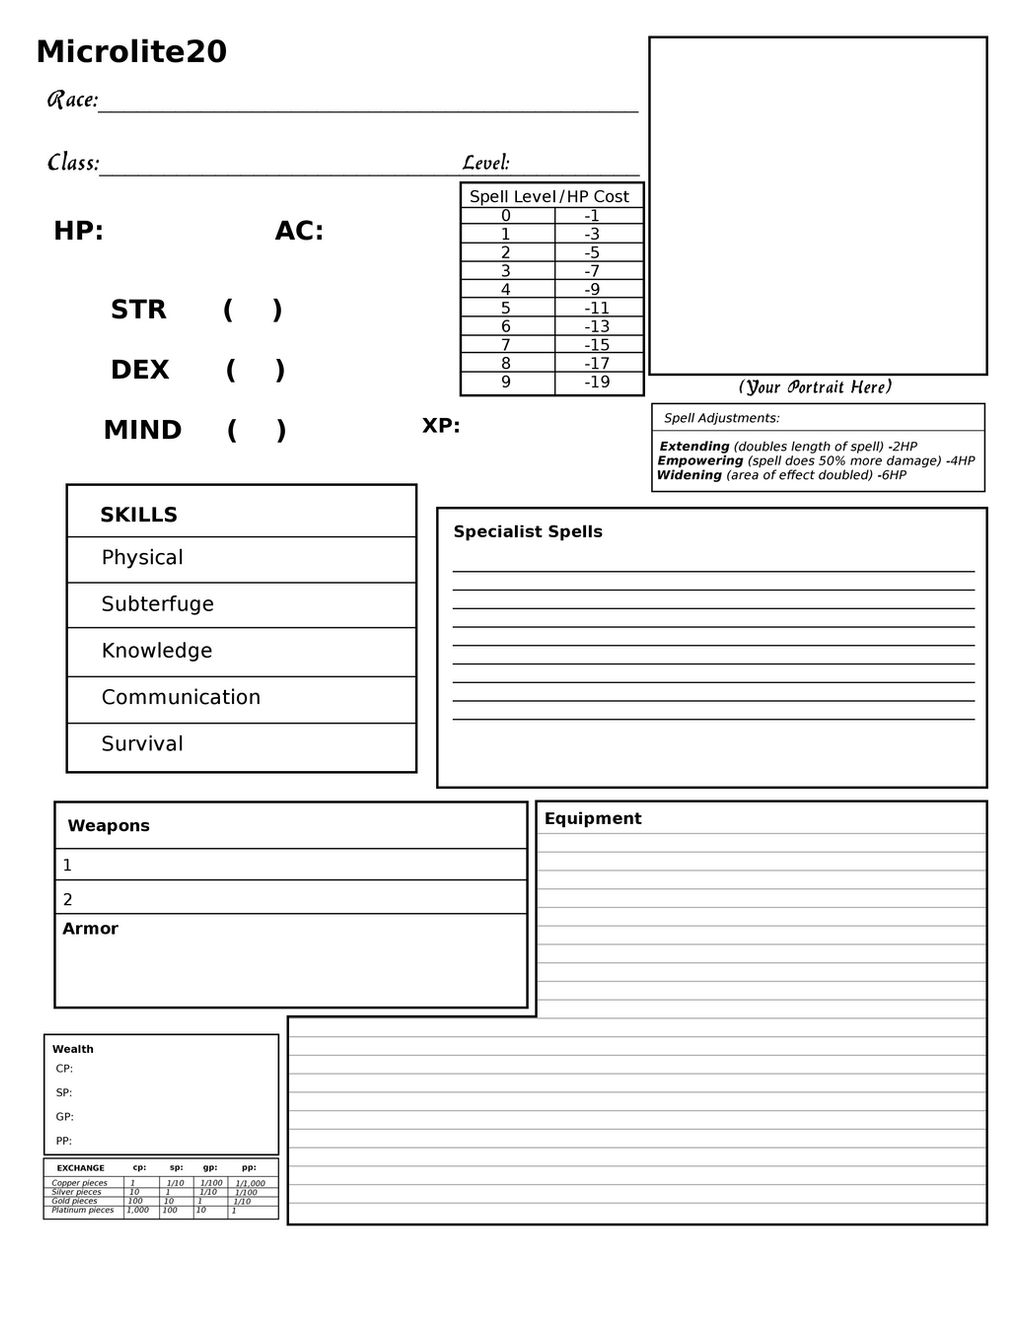 Microlite20 Basic Character Sheet